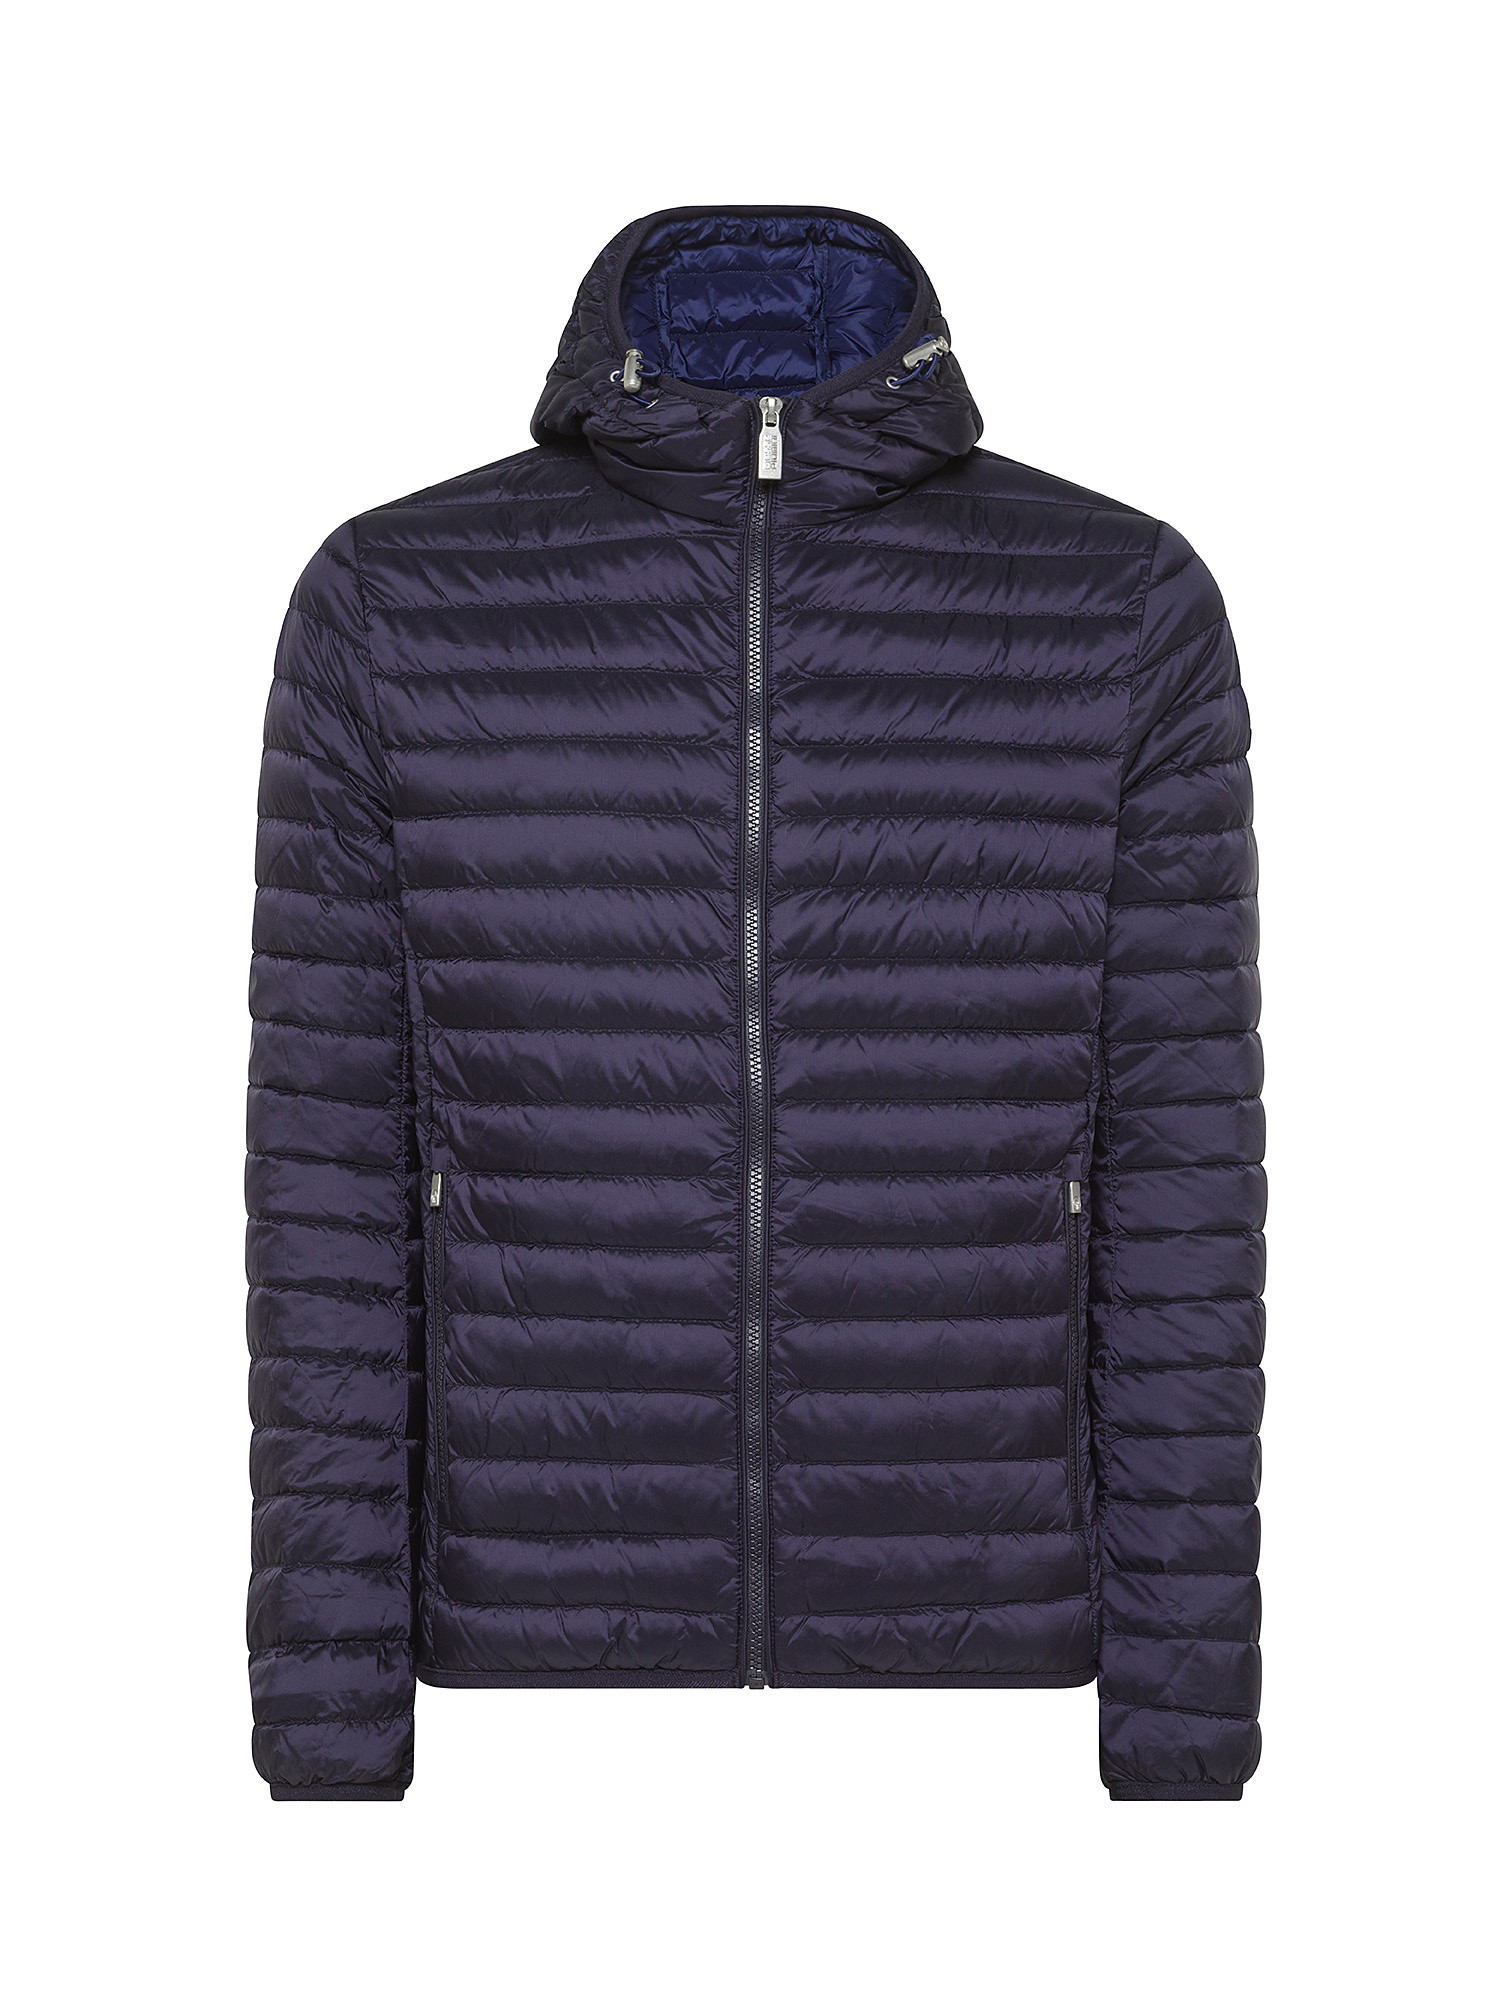 Ciesse Piumini - Larry nylon down jacket with hood, Dark Blue, large image number 0